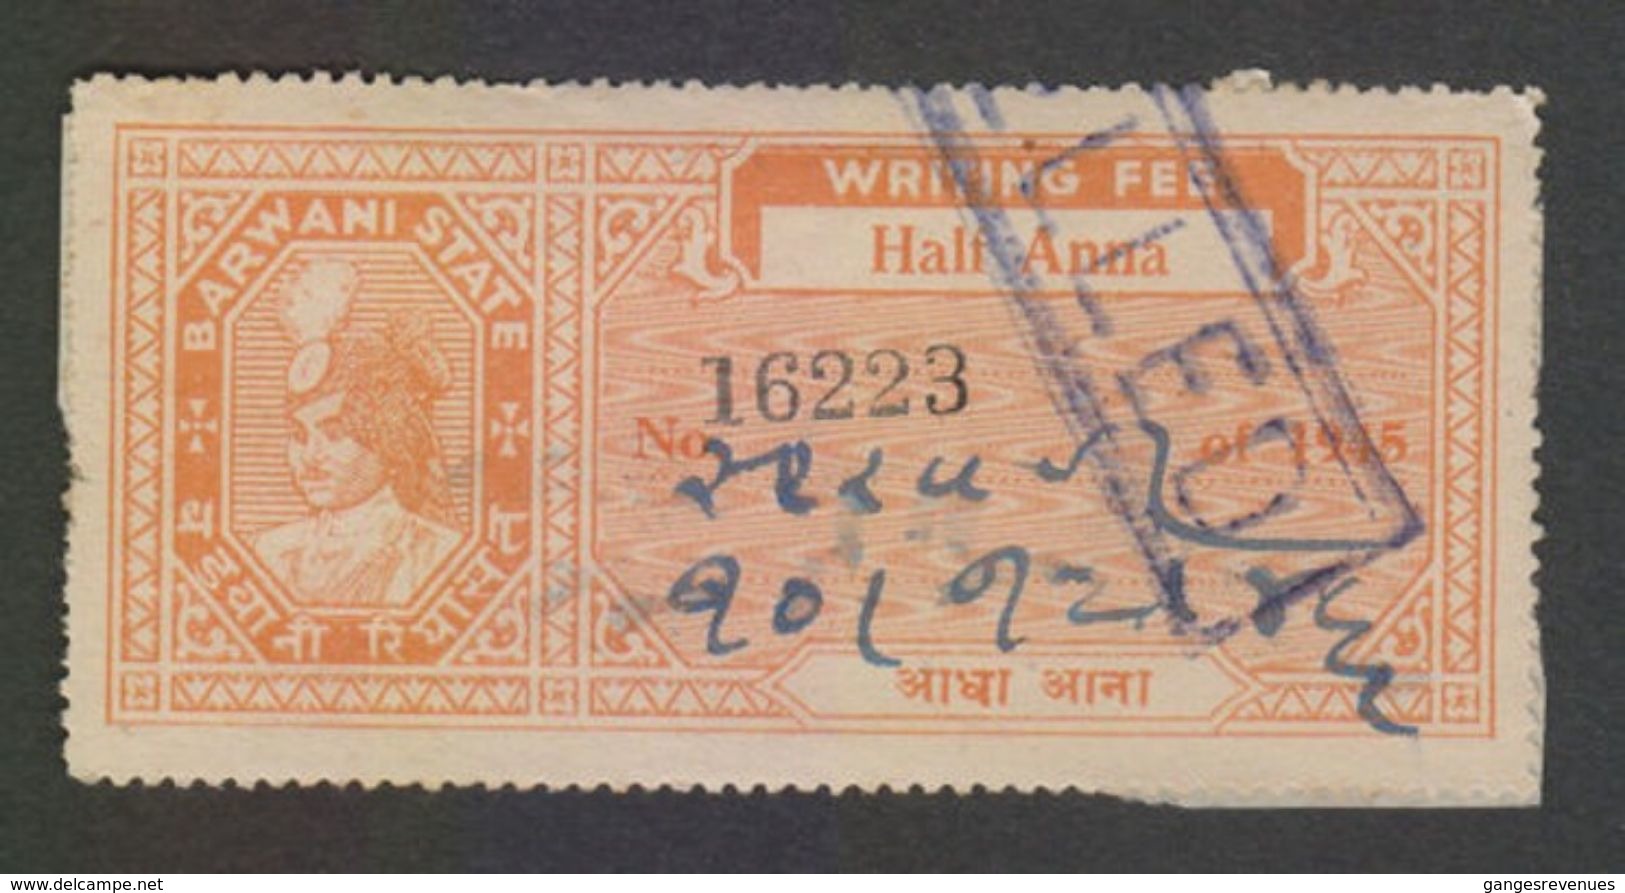 BARWANI  State  1/2A  Writing Fee  Revenue Type 31   #  97832  India  Inde  Indien Revenue Fiscaux - Barwani